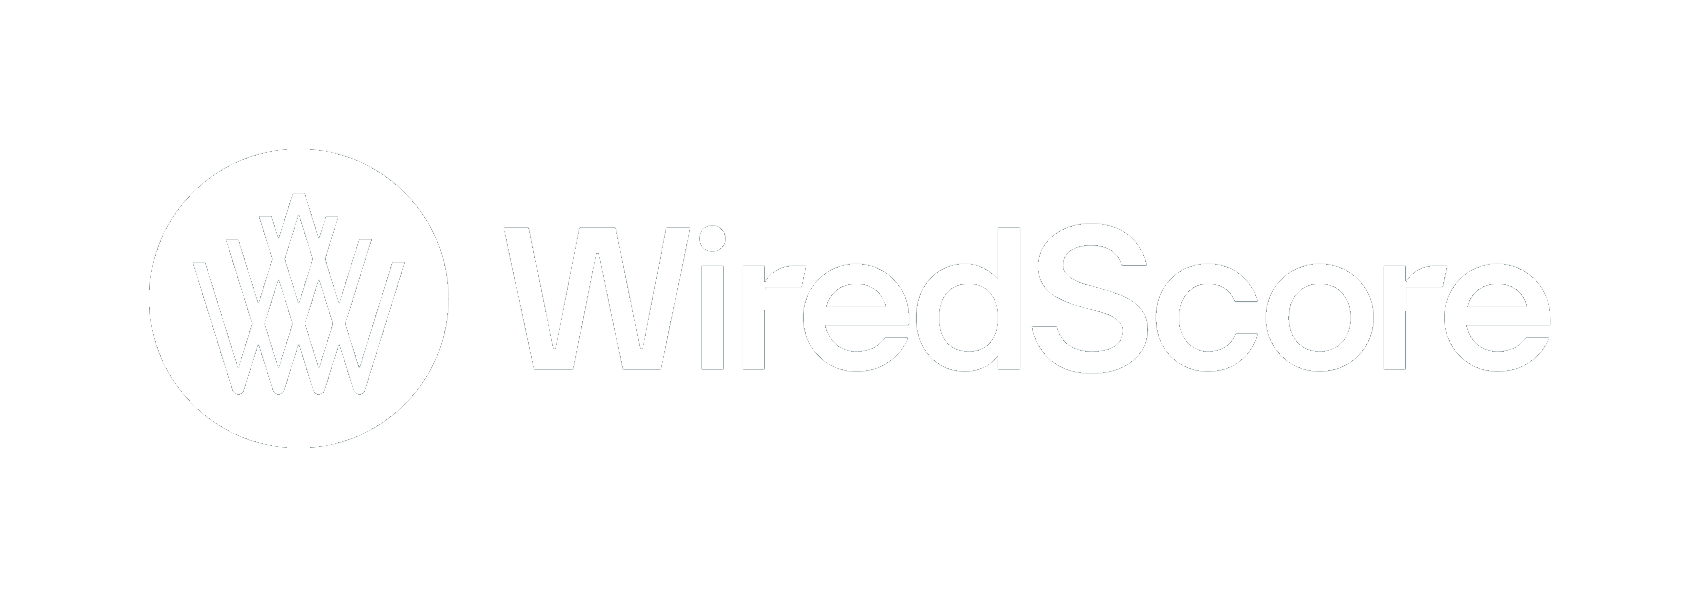 wiredscore wired certification internet connectivity